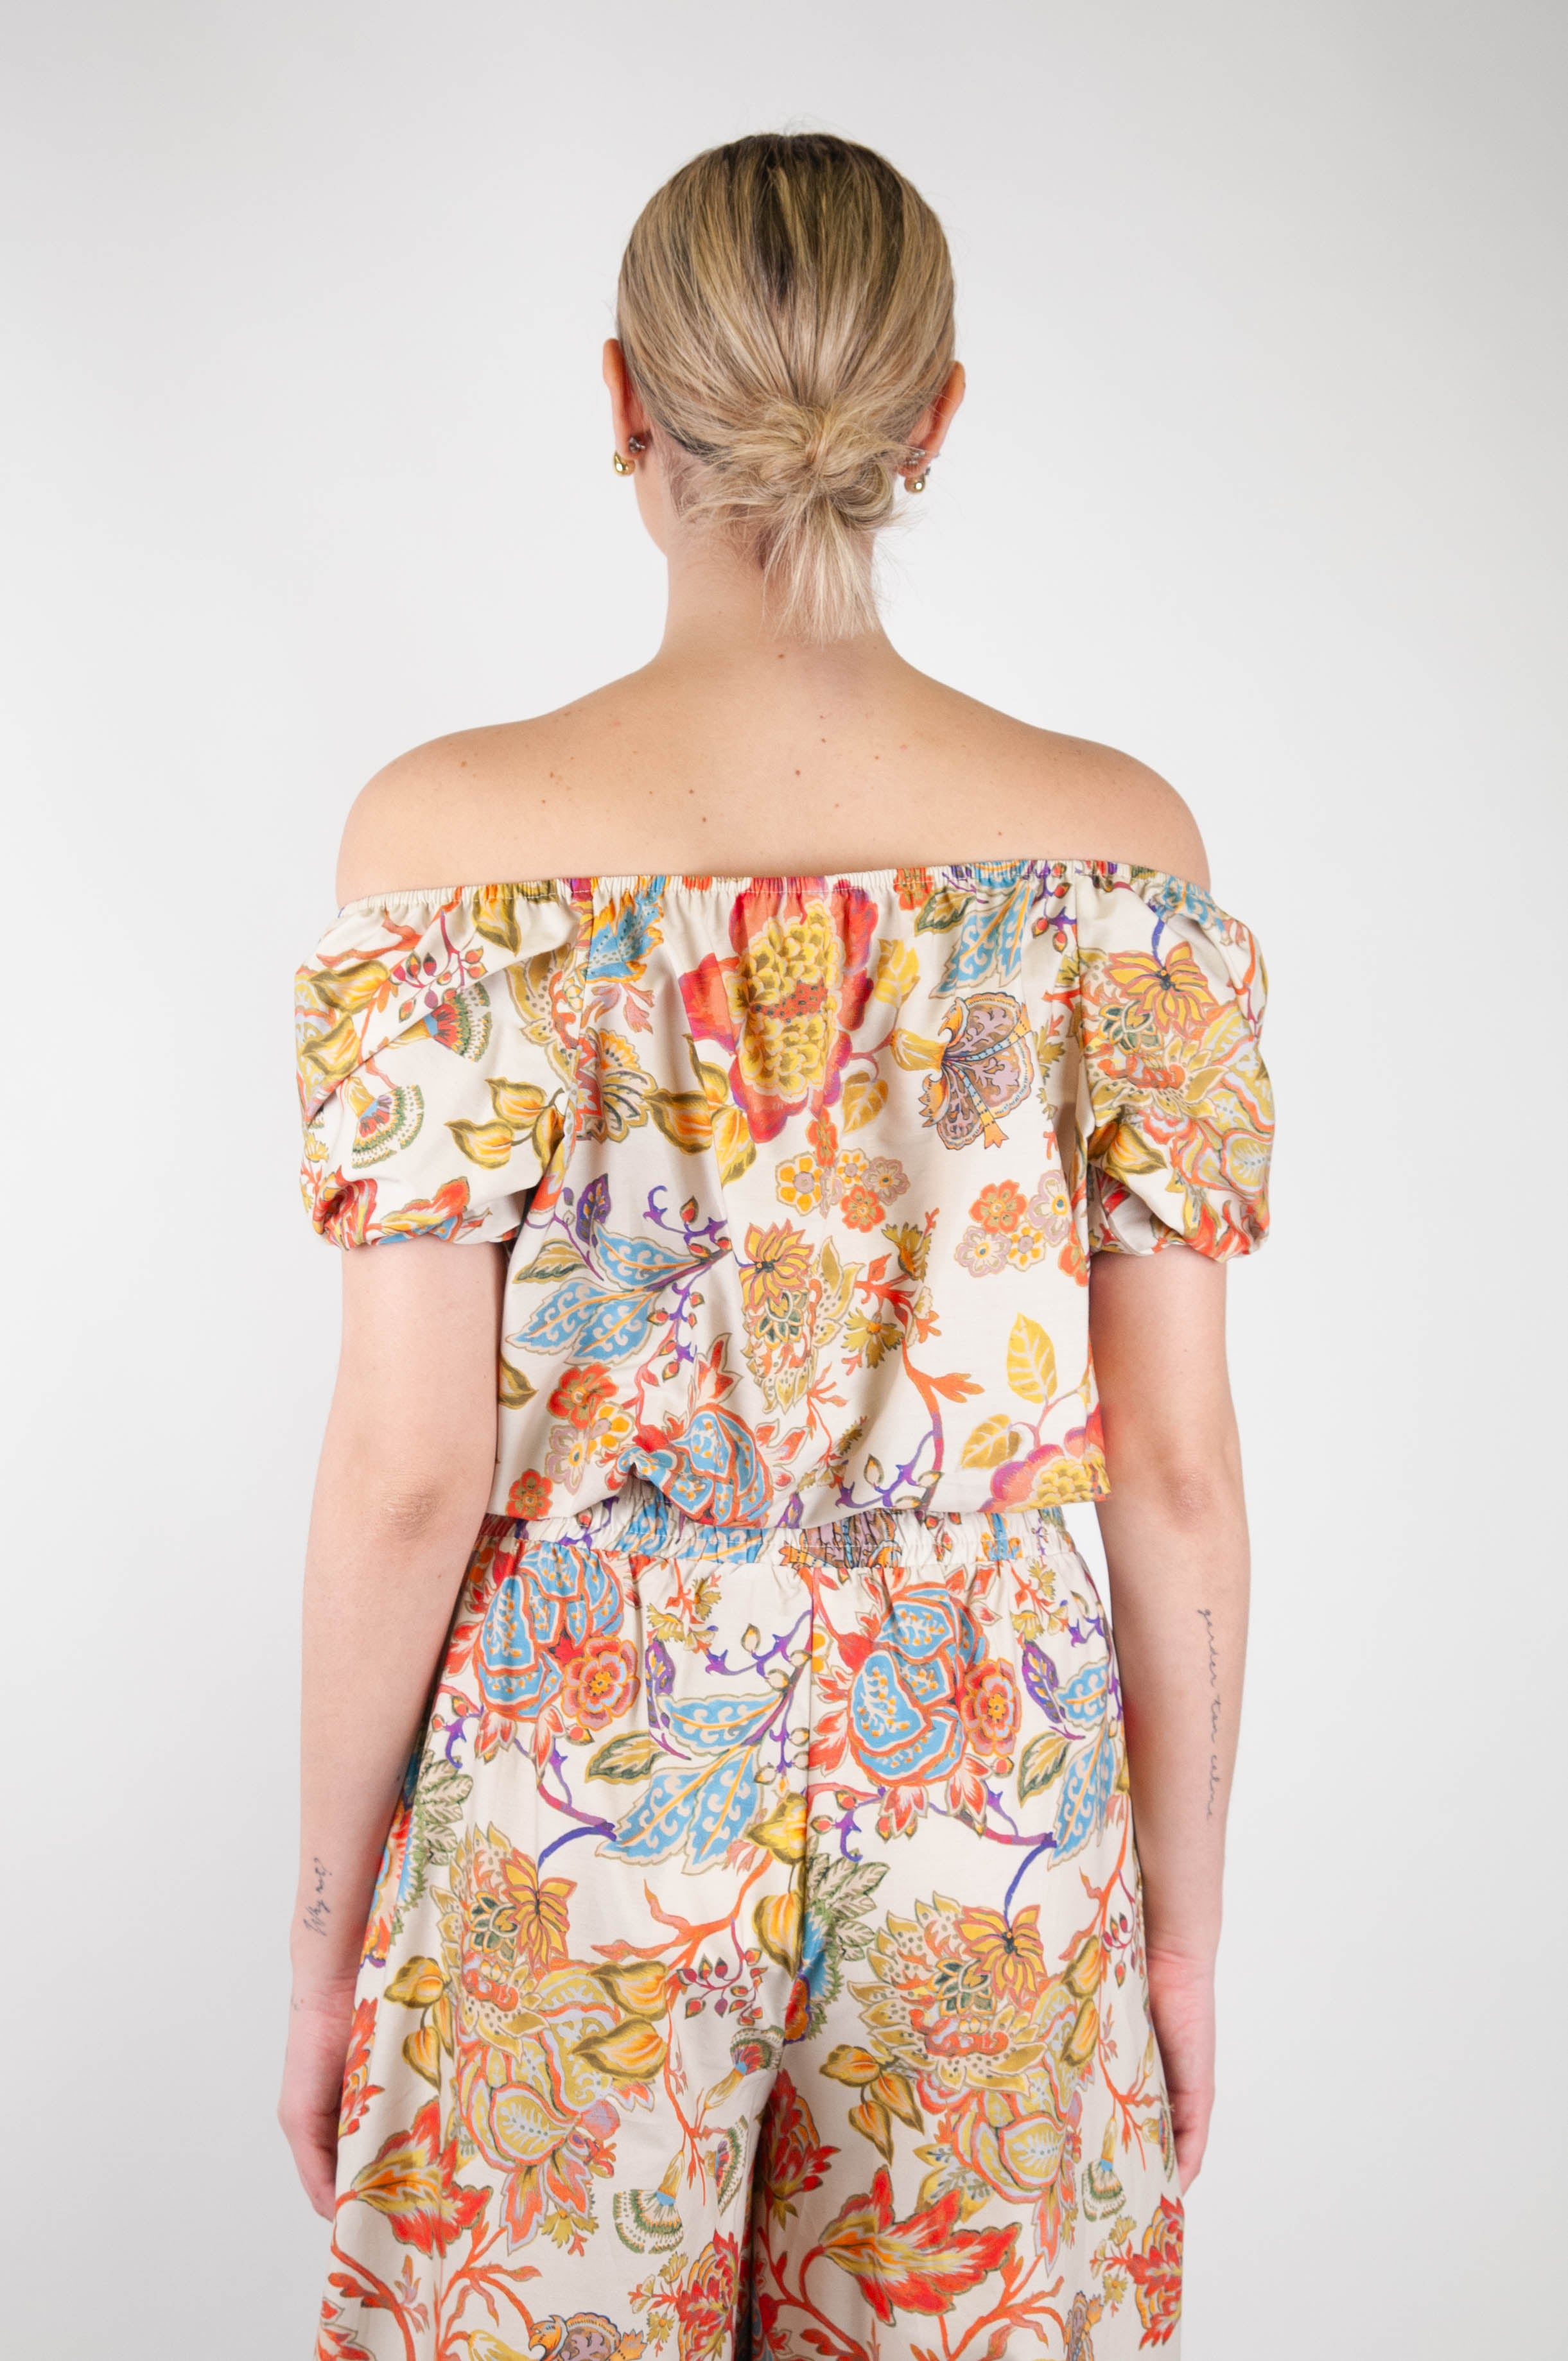 Tension in - Floral patterned shiffer neckline top